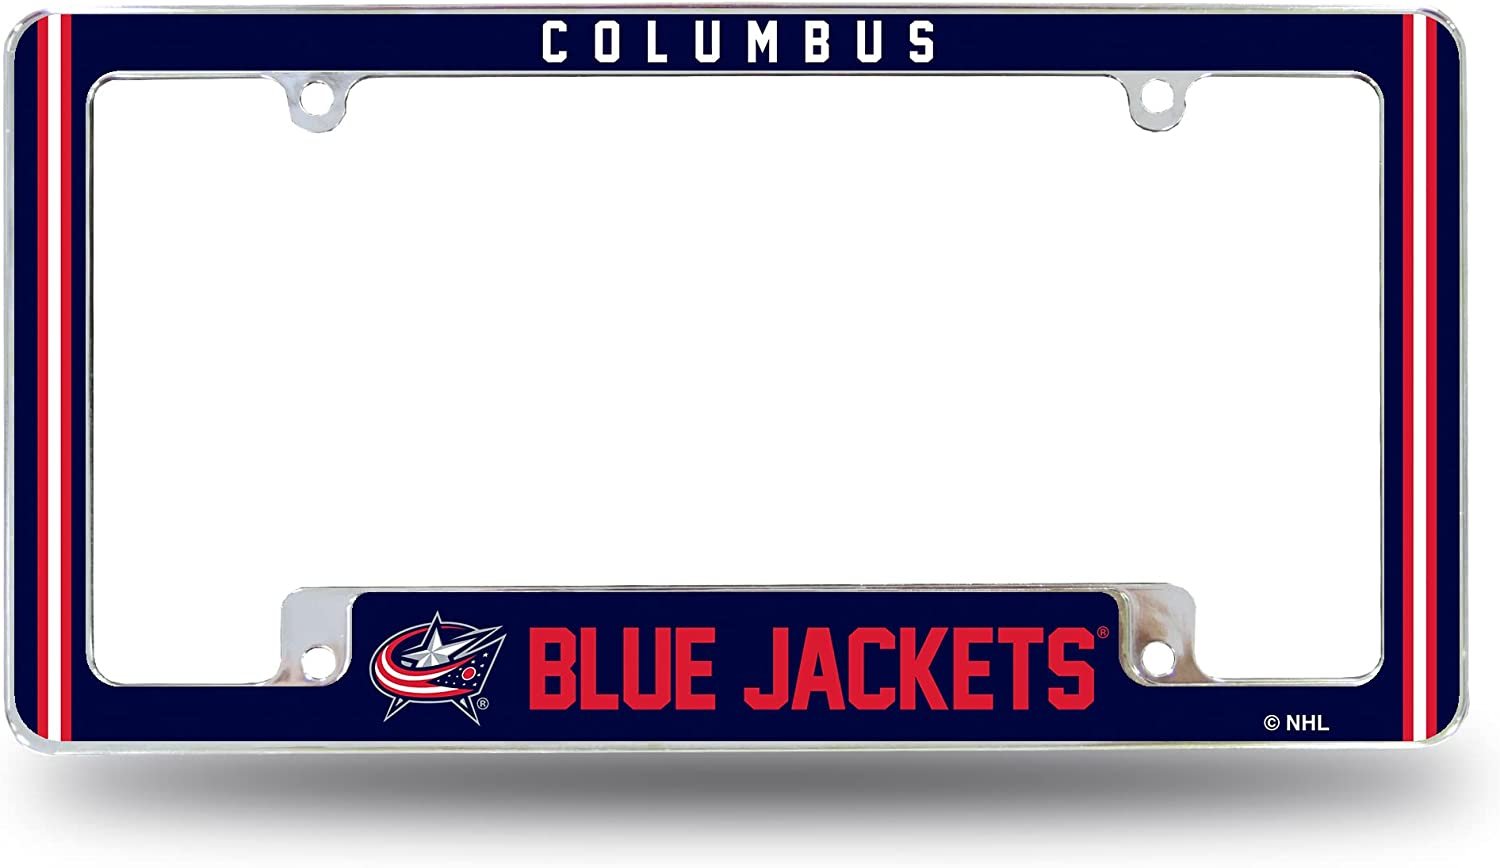 Columbus Blue Jackets Metal License Plate Frame Chrome Tag Cover Alternate Design 6x12 Inch